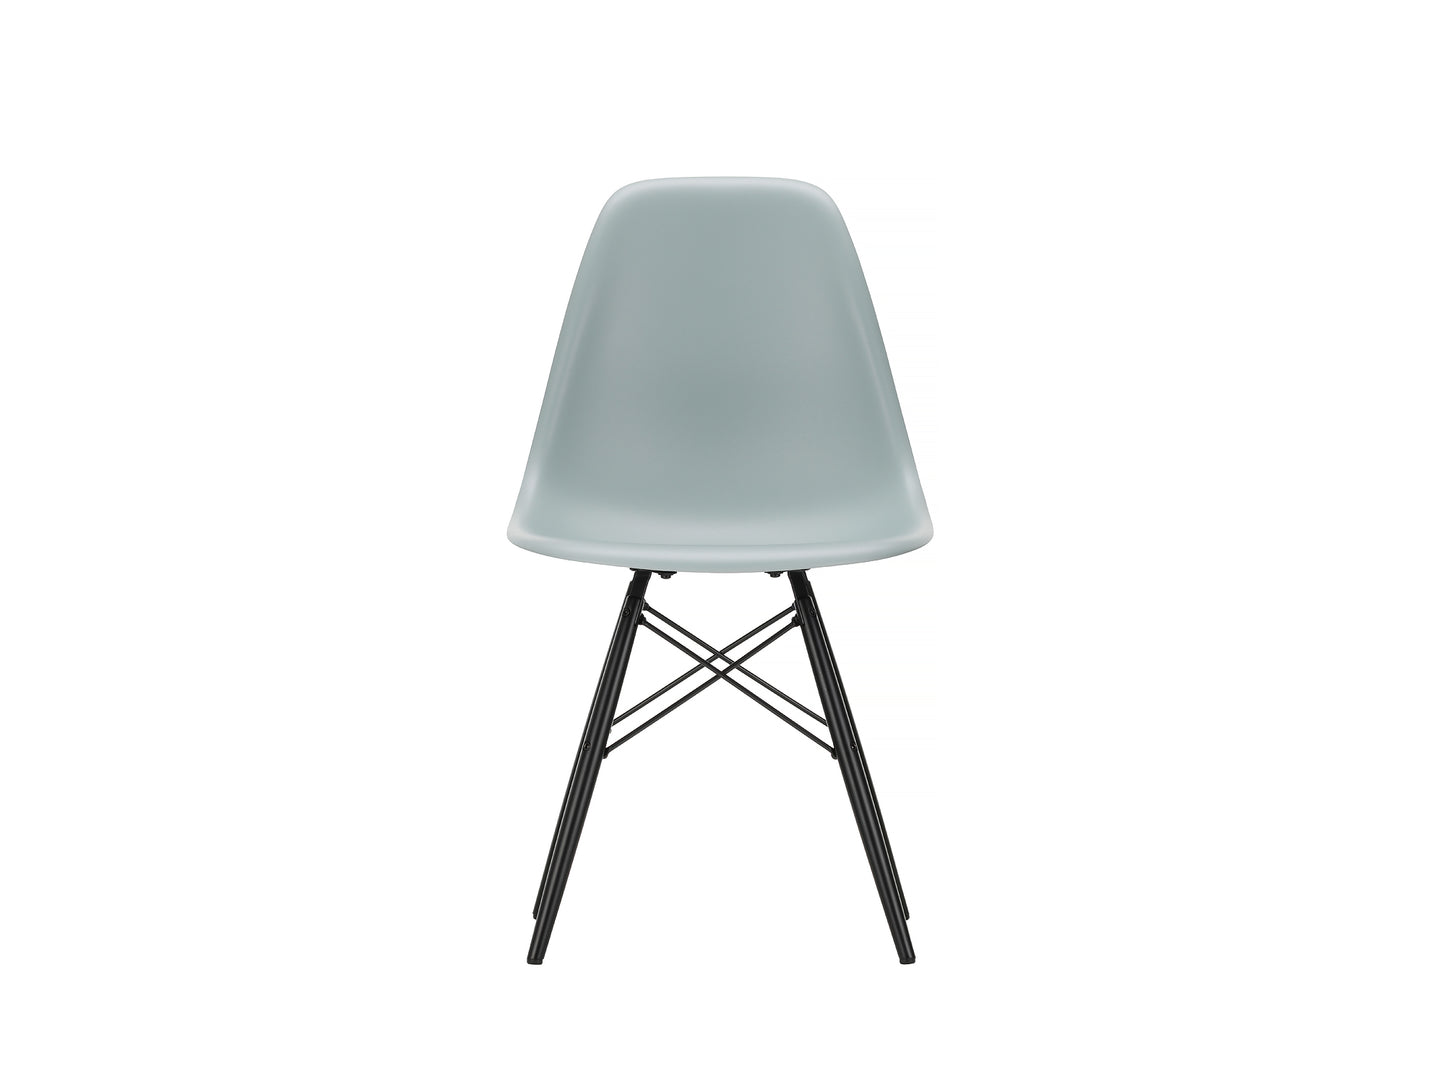 Vitra Eames DSW Plastic Side Chair - Light Grey 24